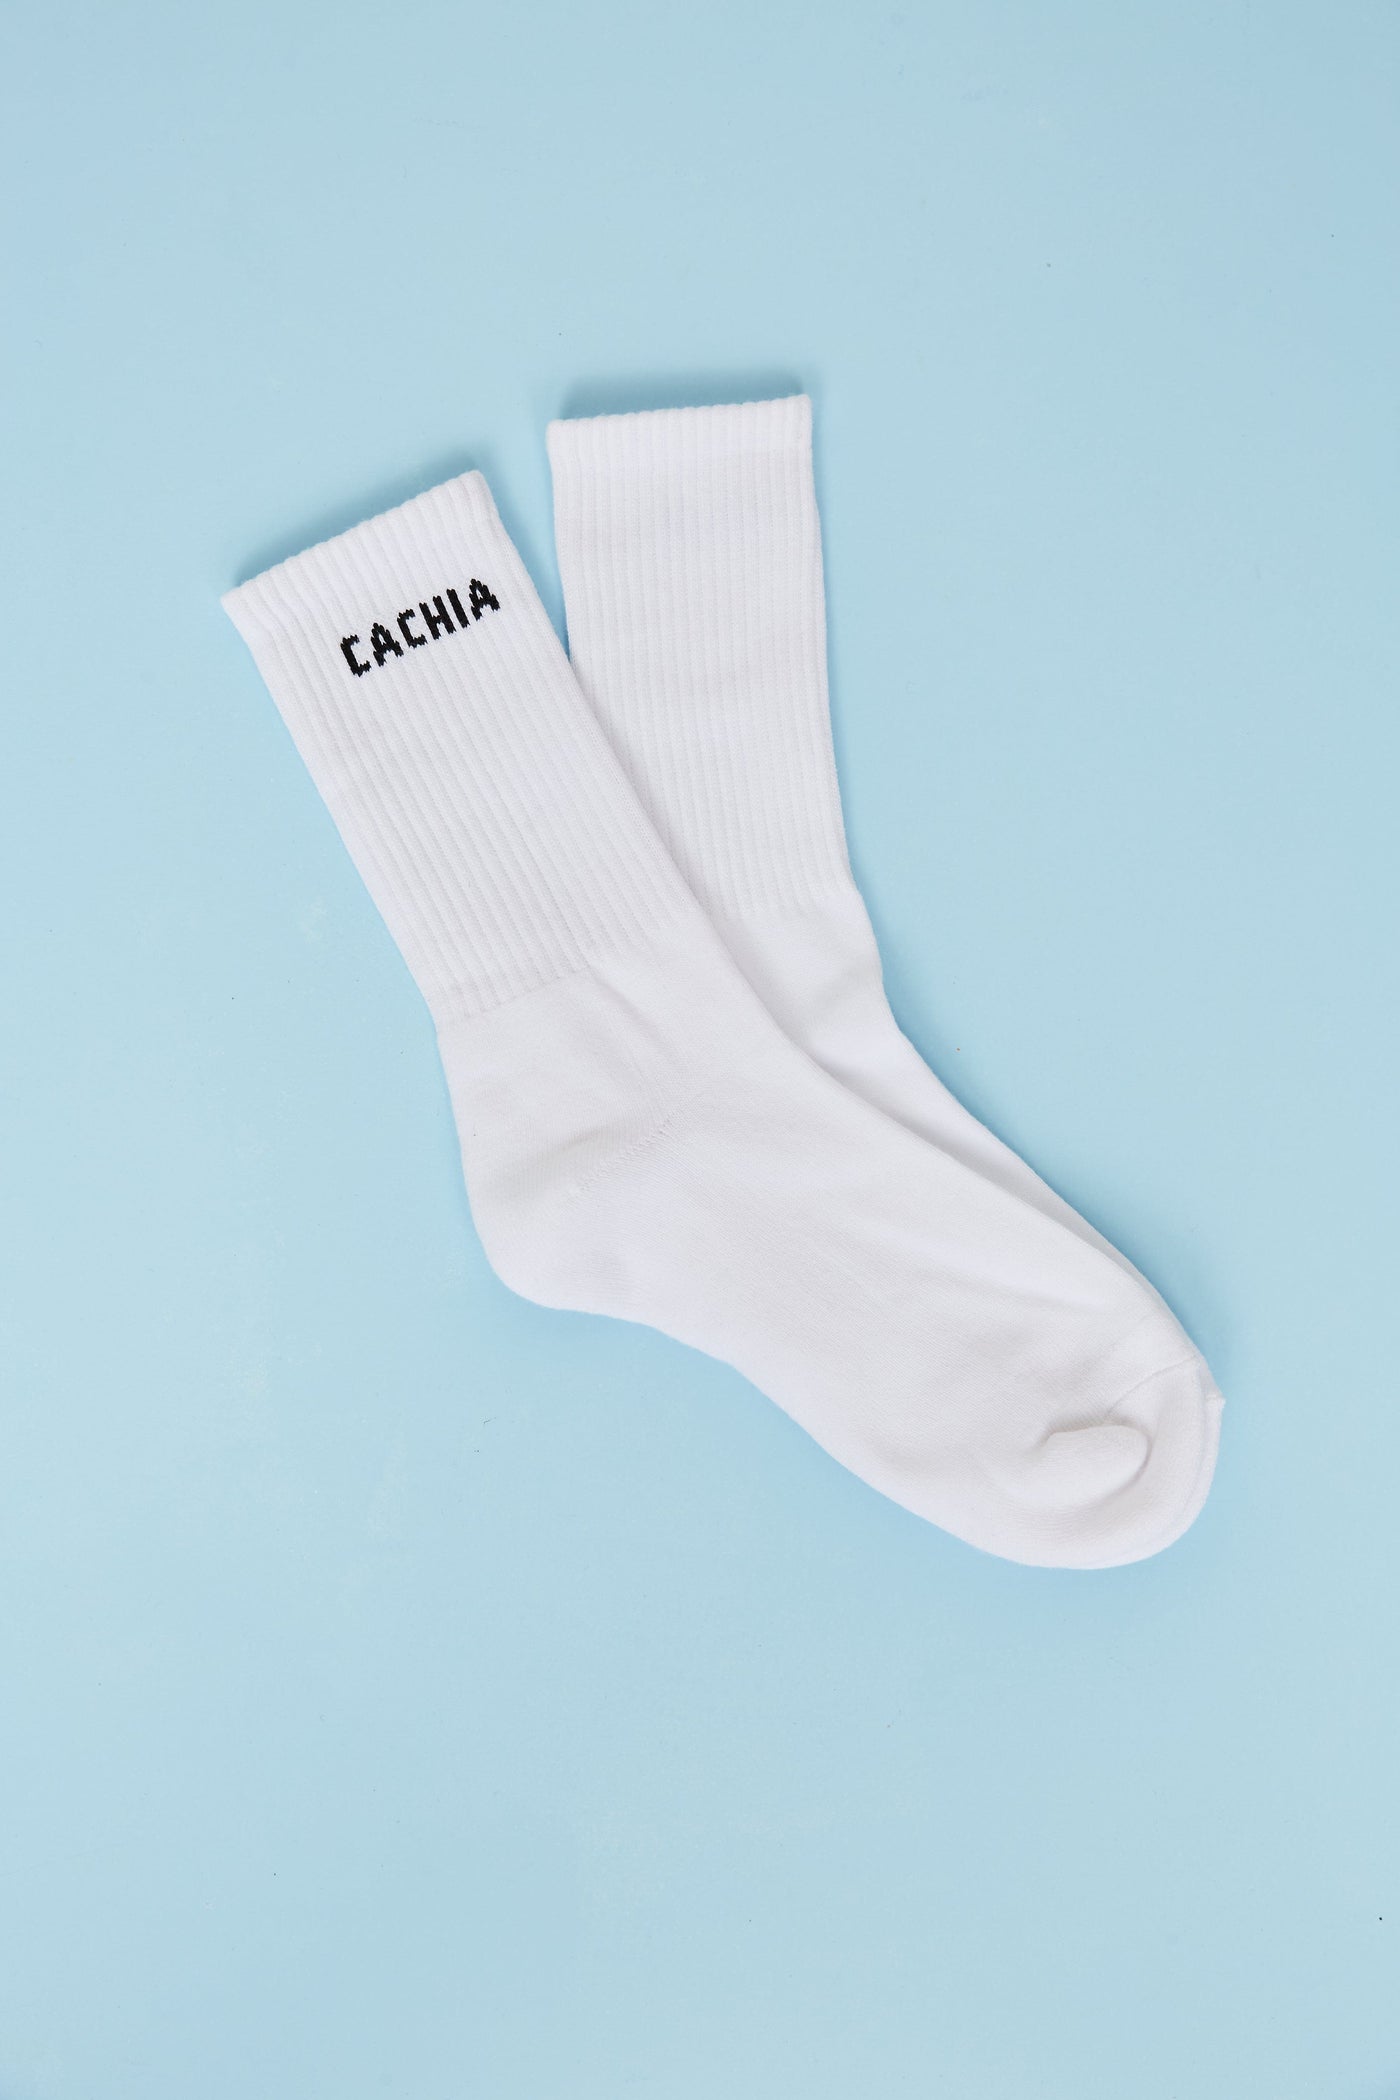 Cachia Cachia Crew Sock - White Sock